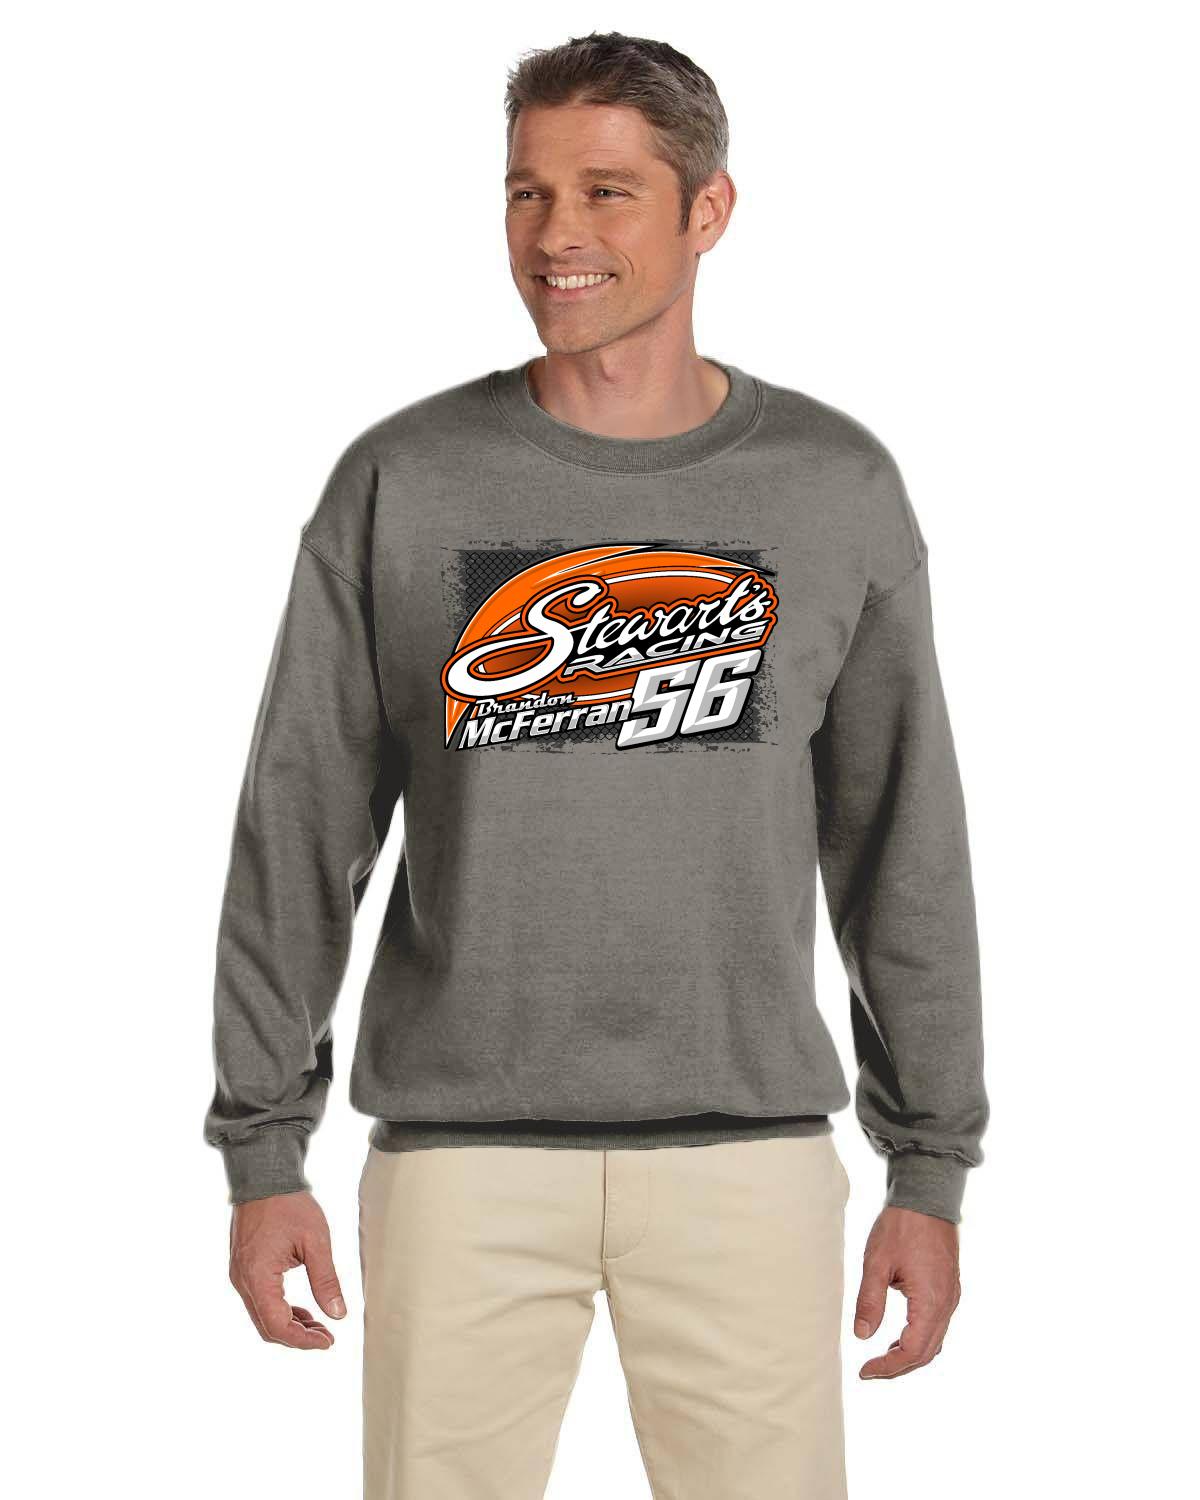 Stewart's Racing Brandon McFerran 56 Adult crew neck sweater